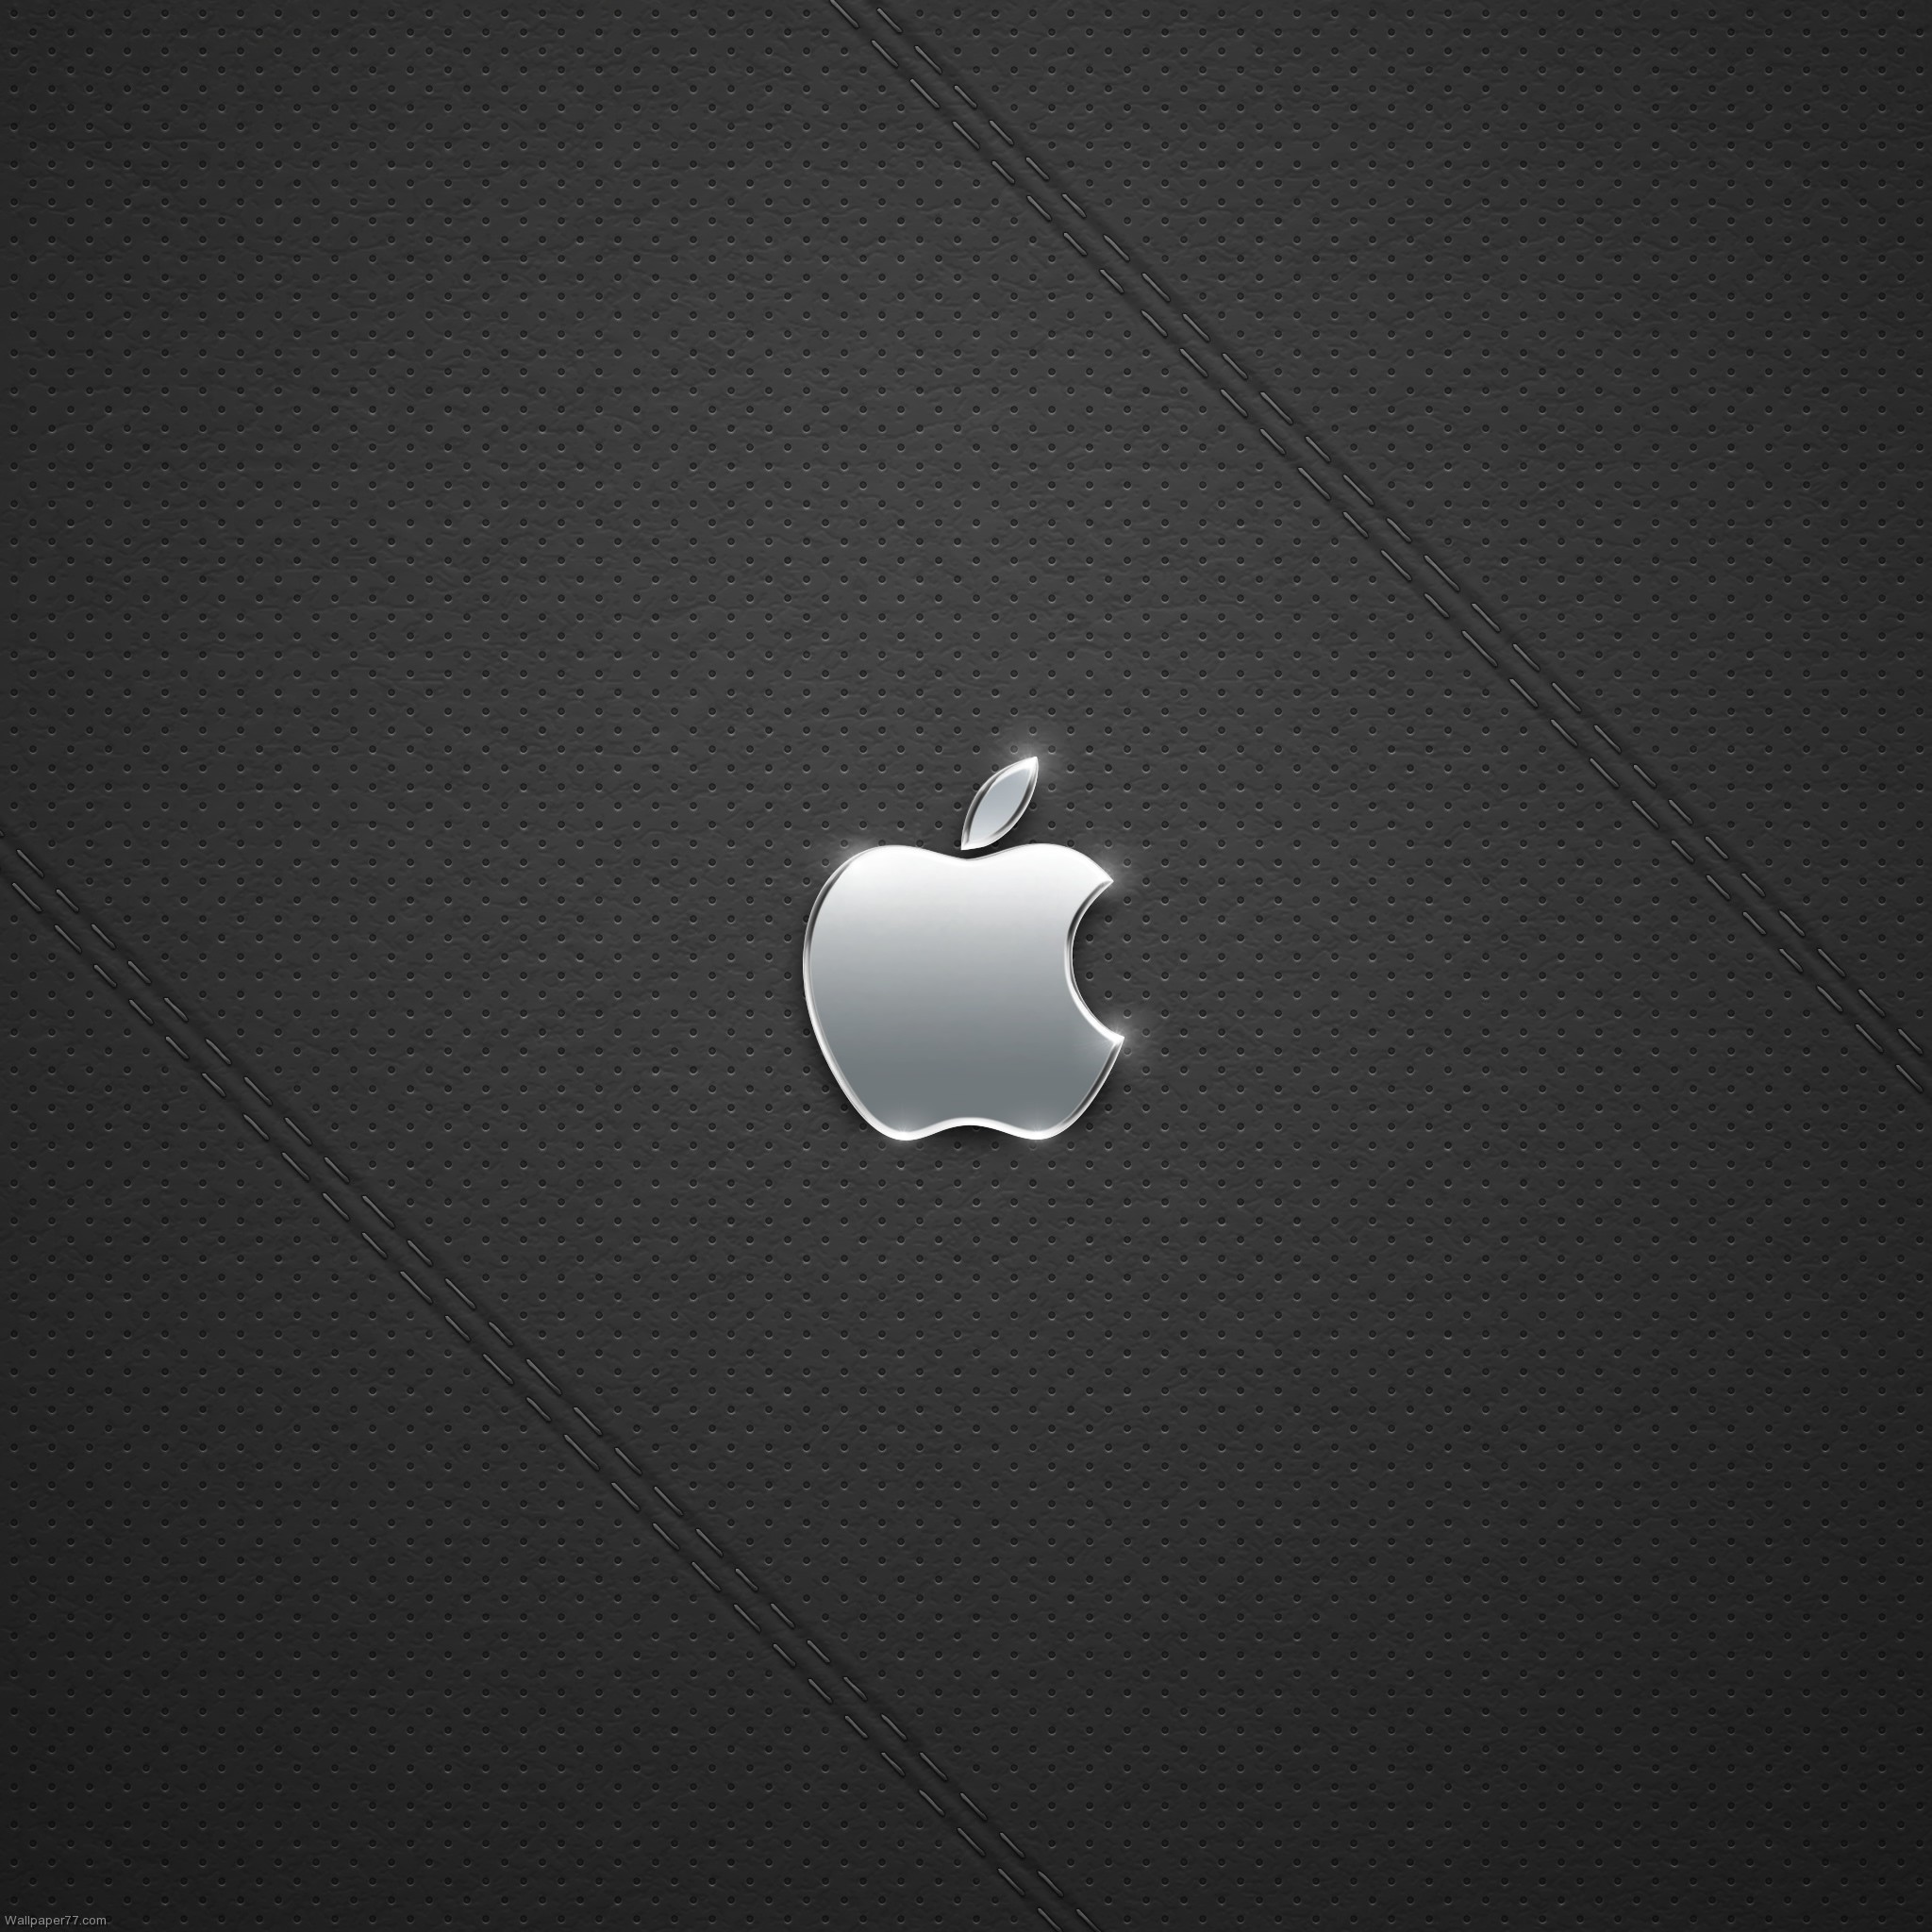 New iPad Wallpaper Apple Puter Mac